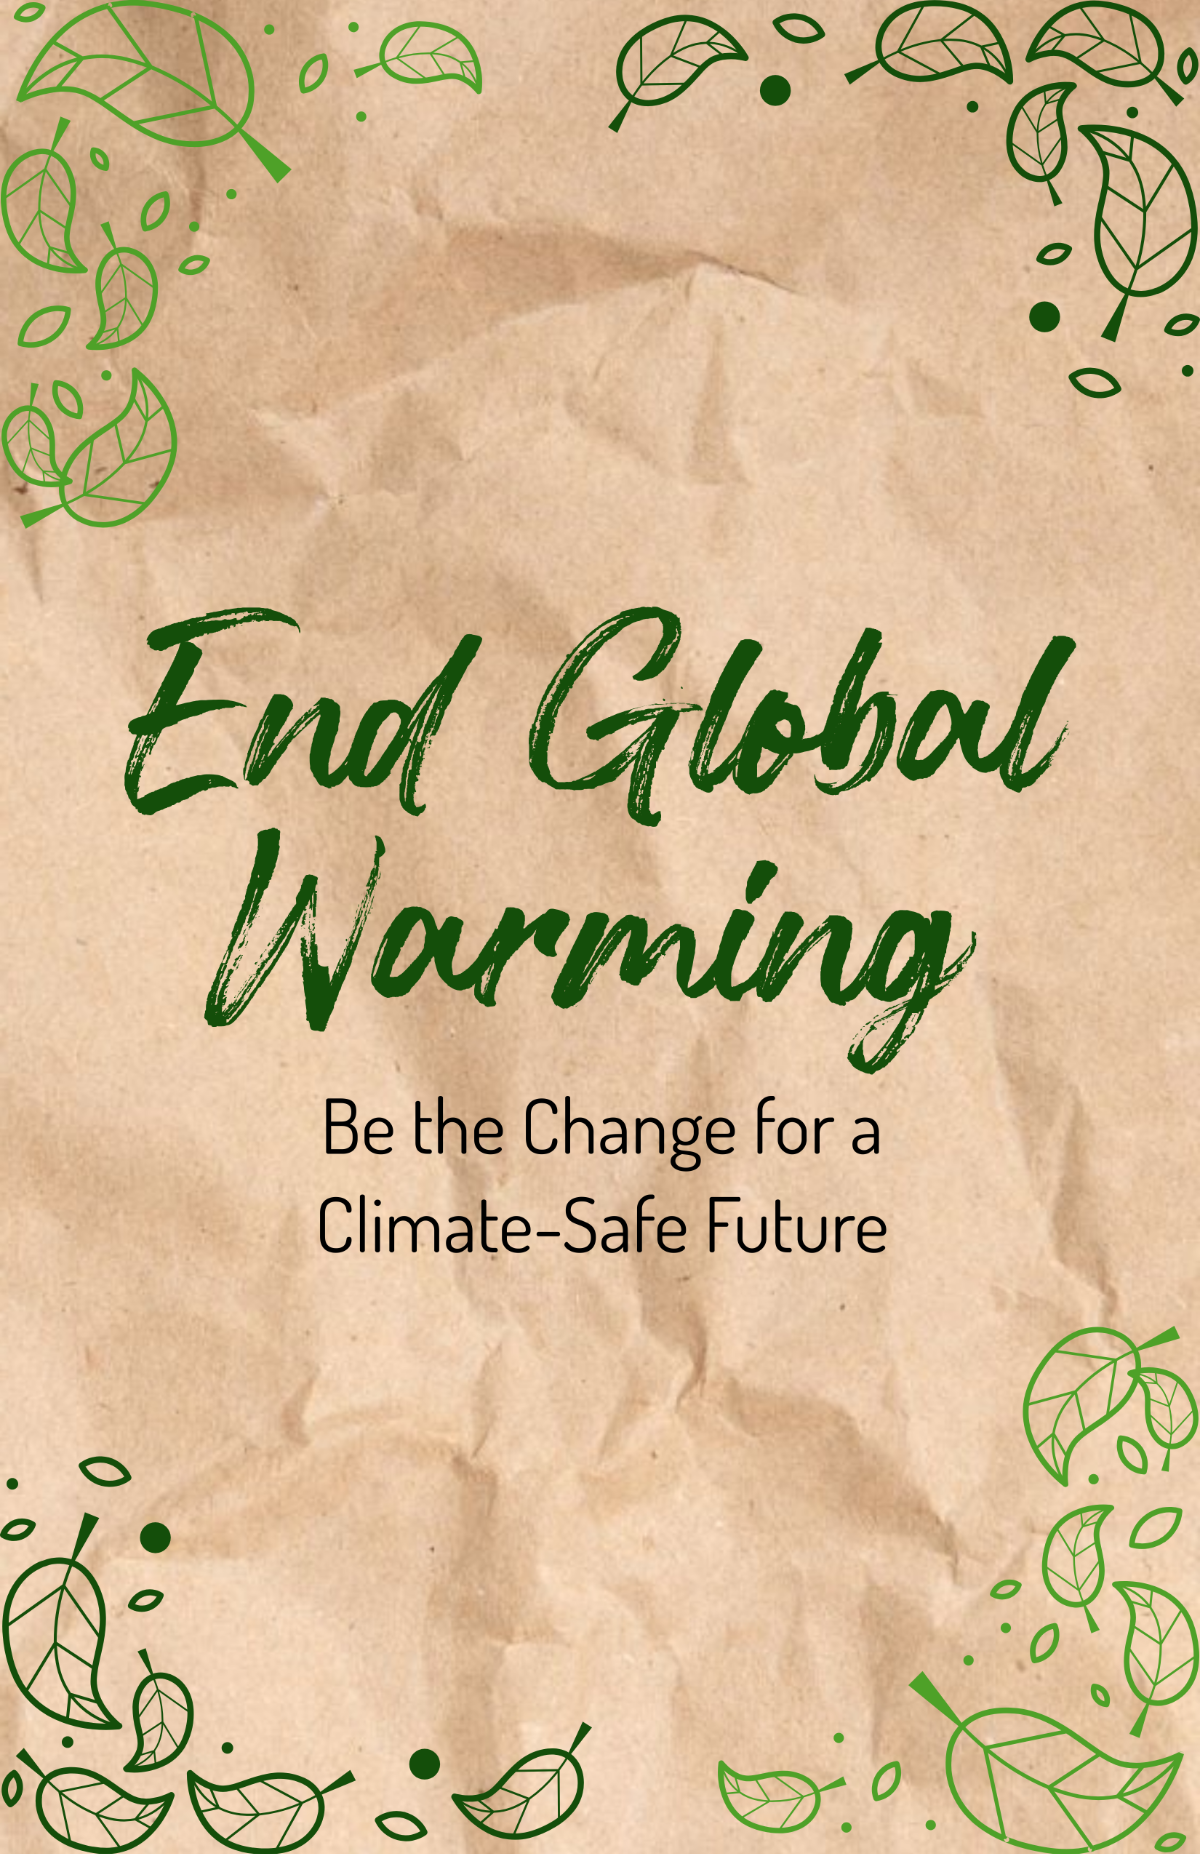 Global Warming Handmade Poster